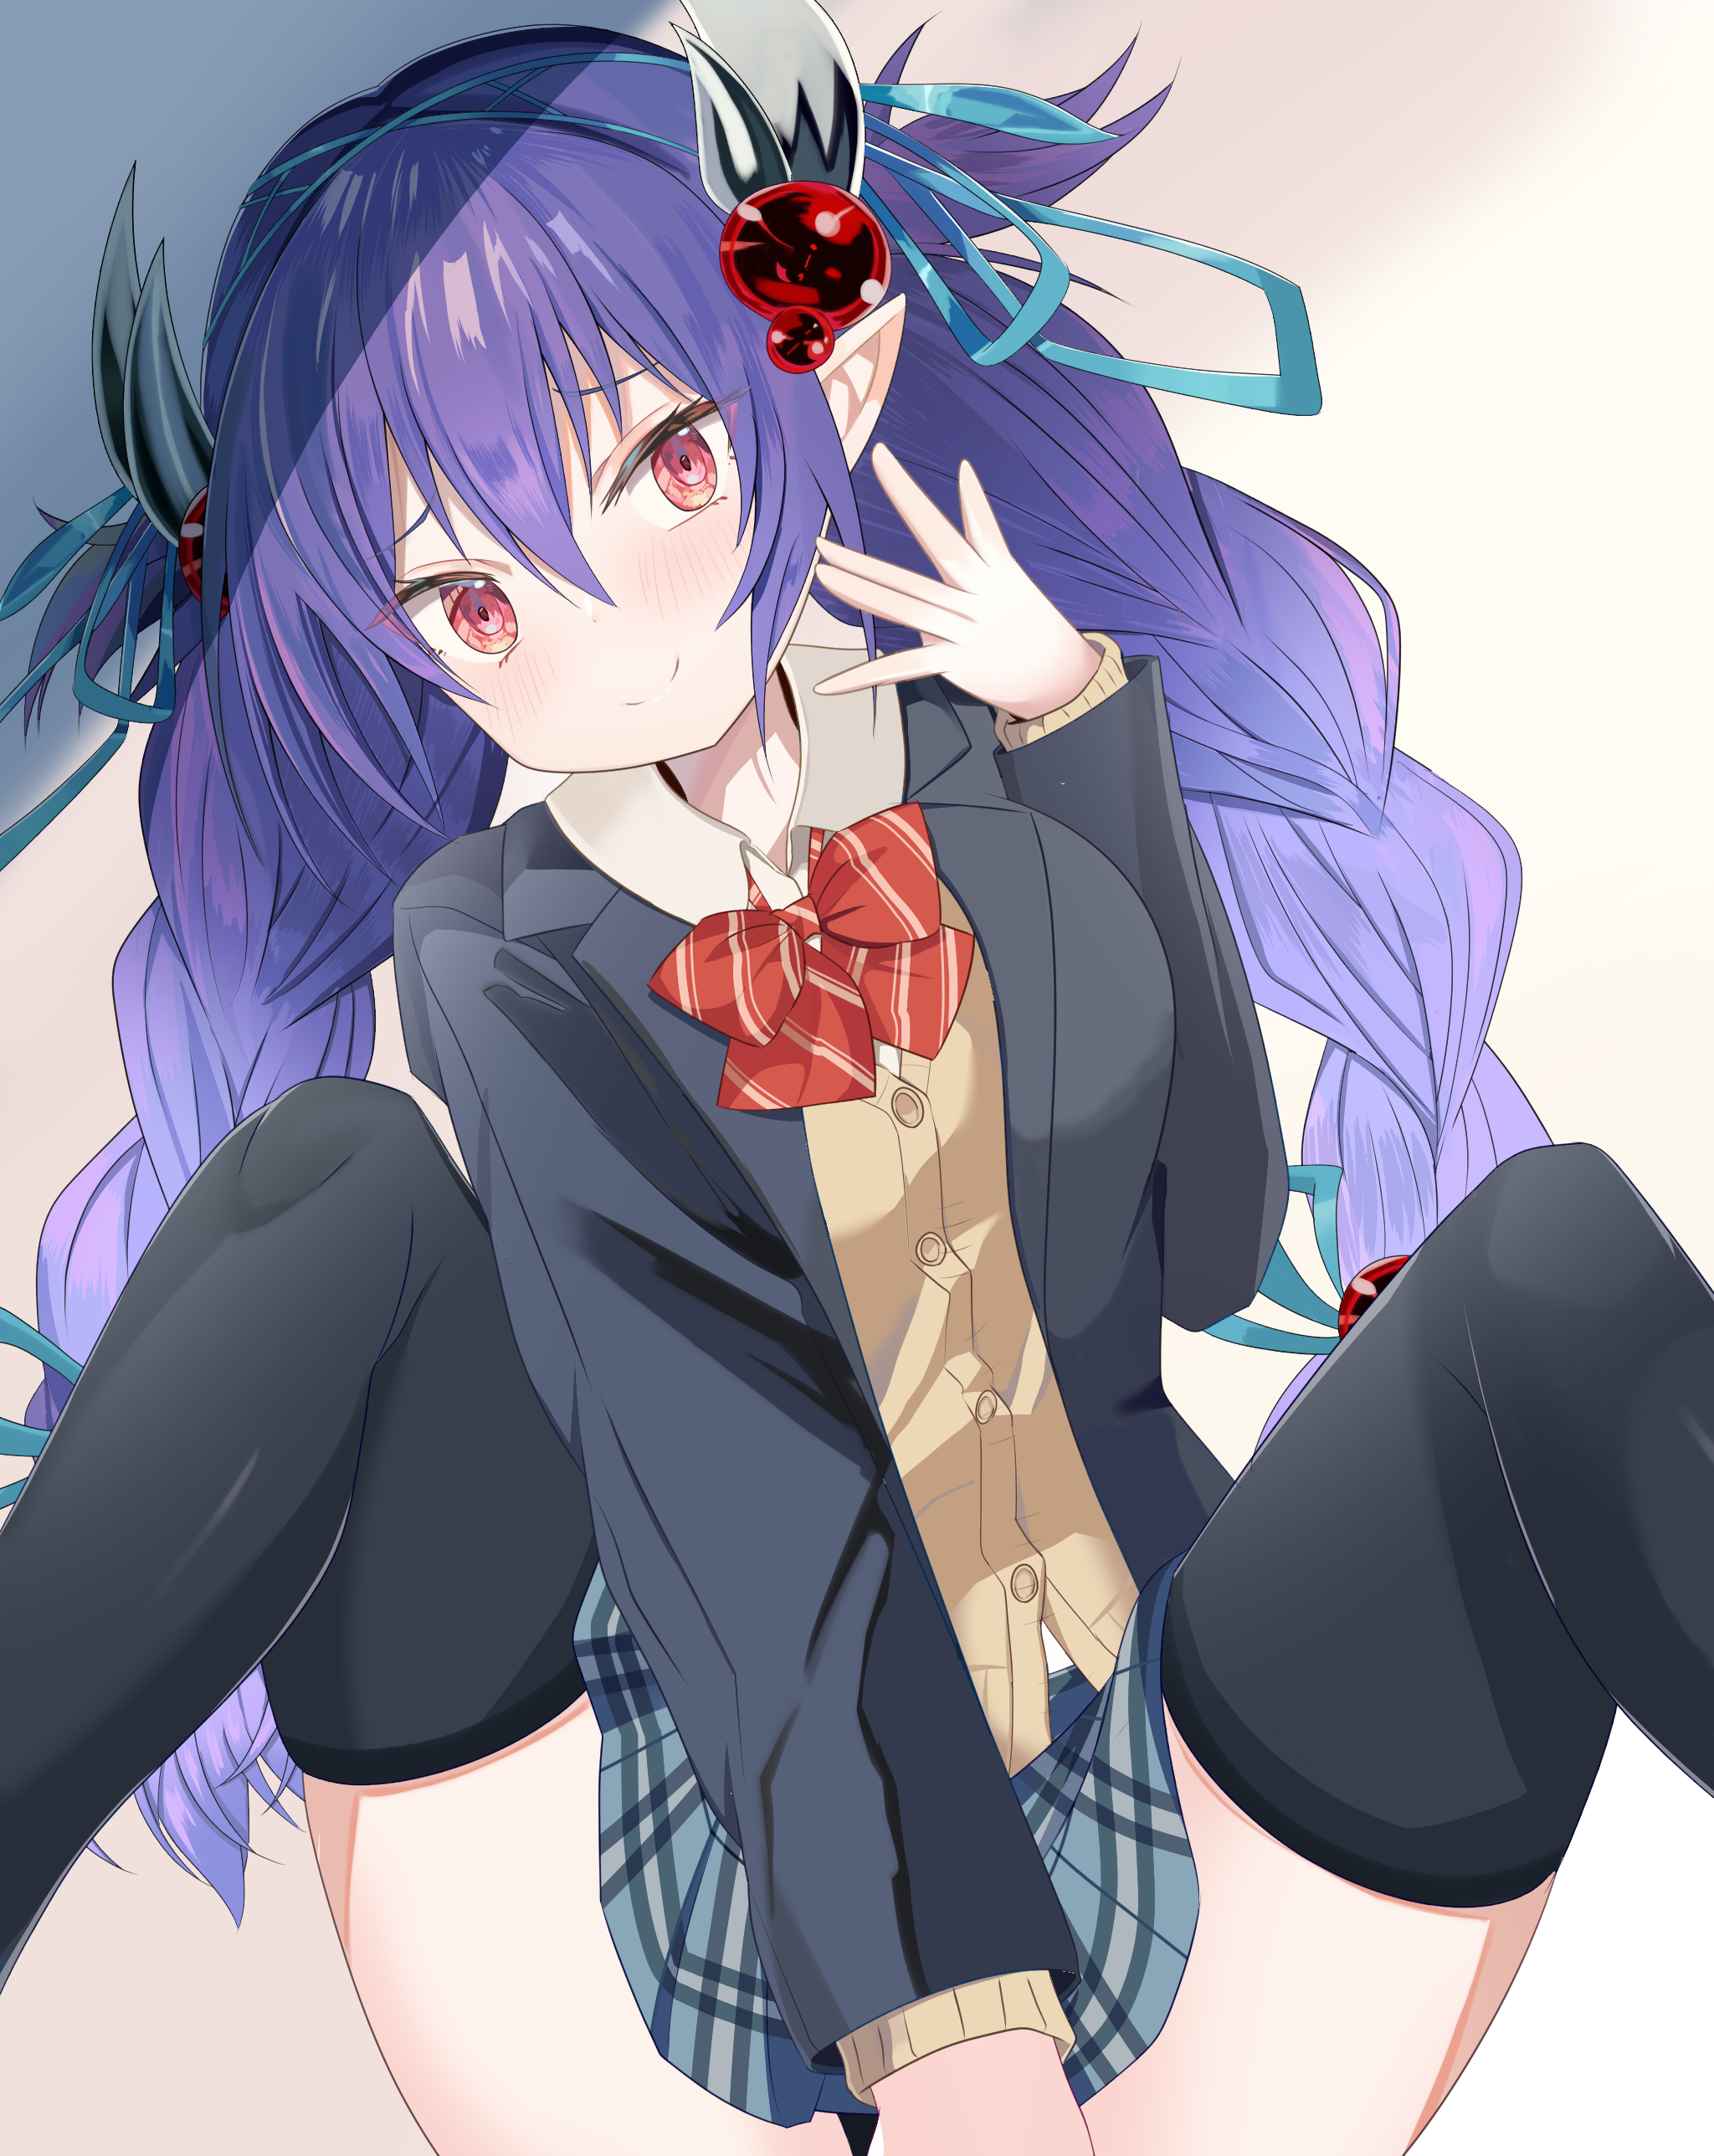 Anime 2048x2576 Traptrix Atrax school uniform Yu-Gi-Oh! anime anime girls Trading Card Games artwork digital art fan art twintails long hair purple hair